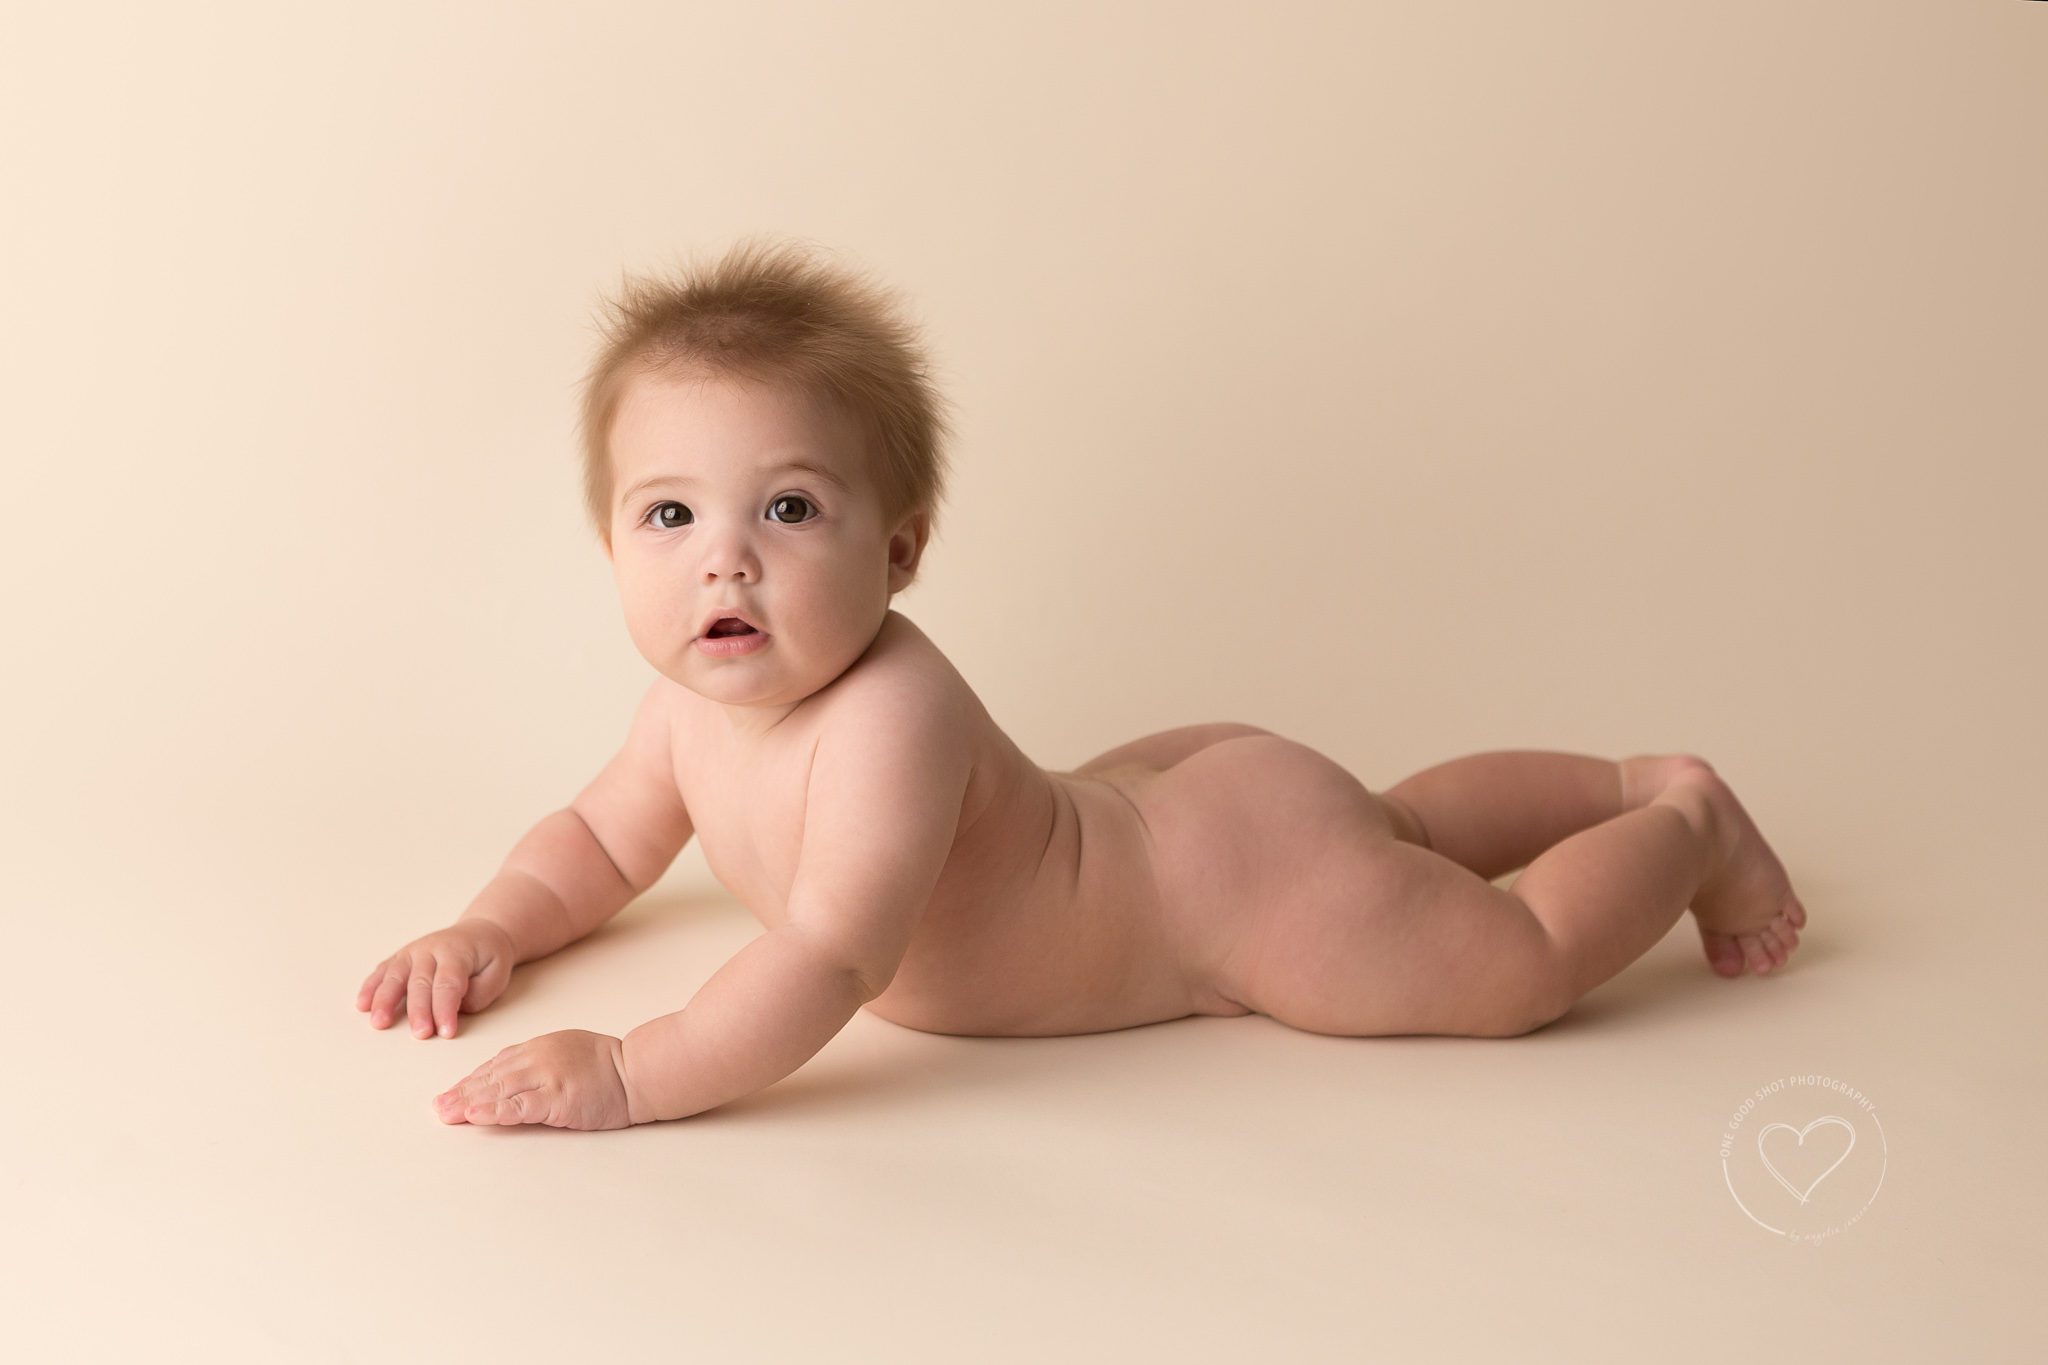 6 month old baby boy, naked, on tummy, milestone session, Fresno baby photographer